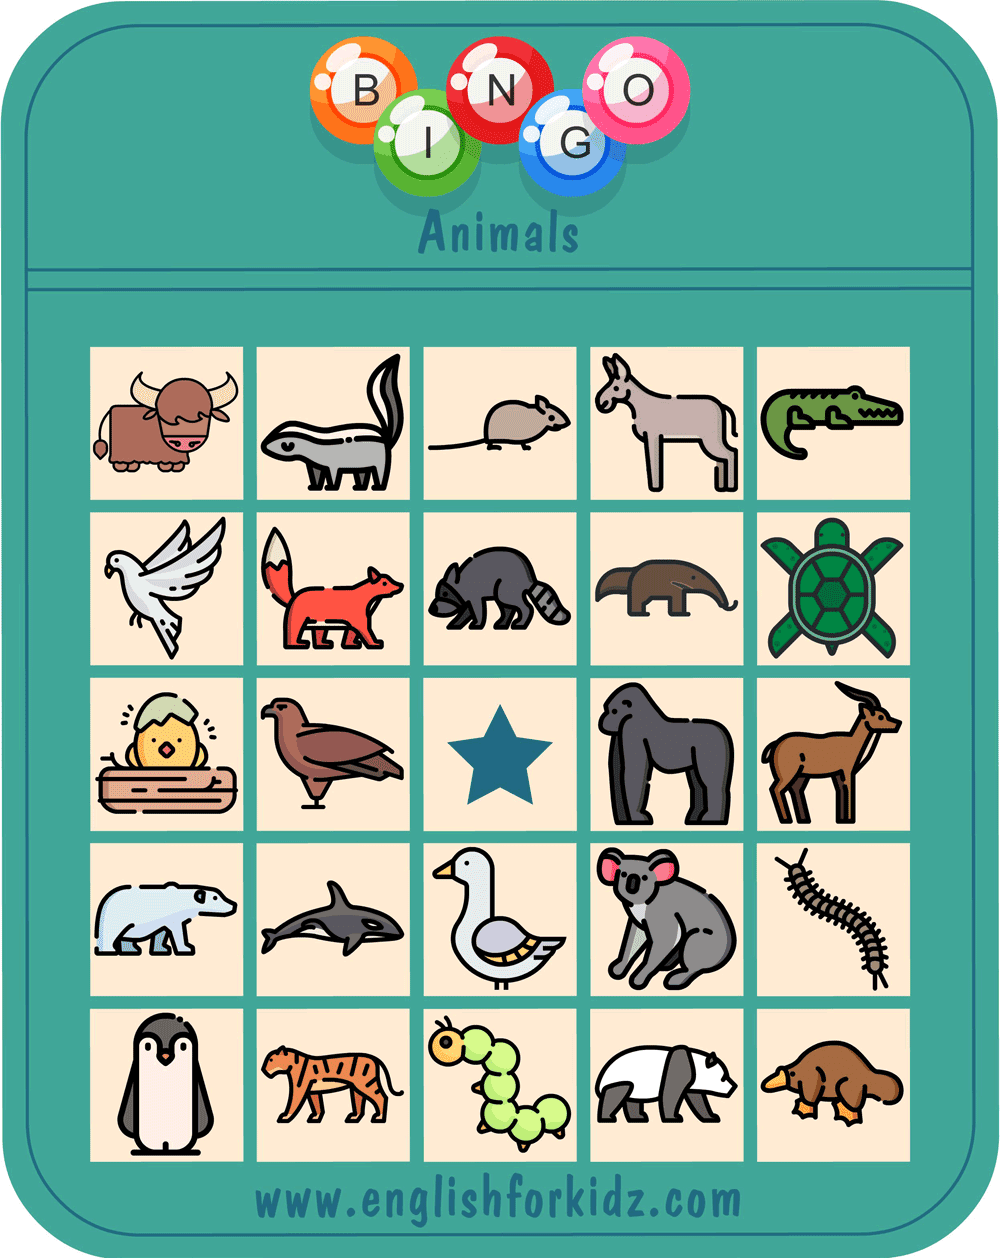 english-for-kids-step-by-step-printable-animals-bingo-game